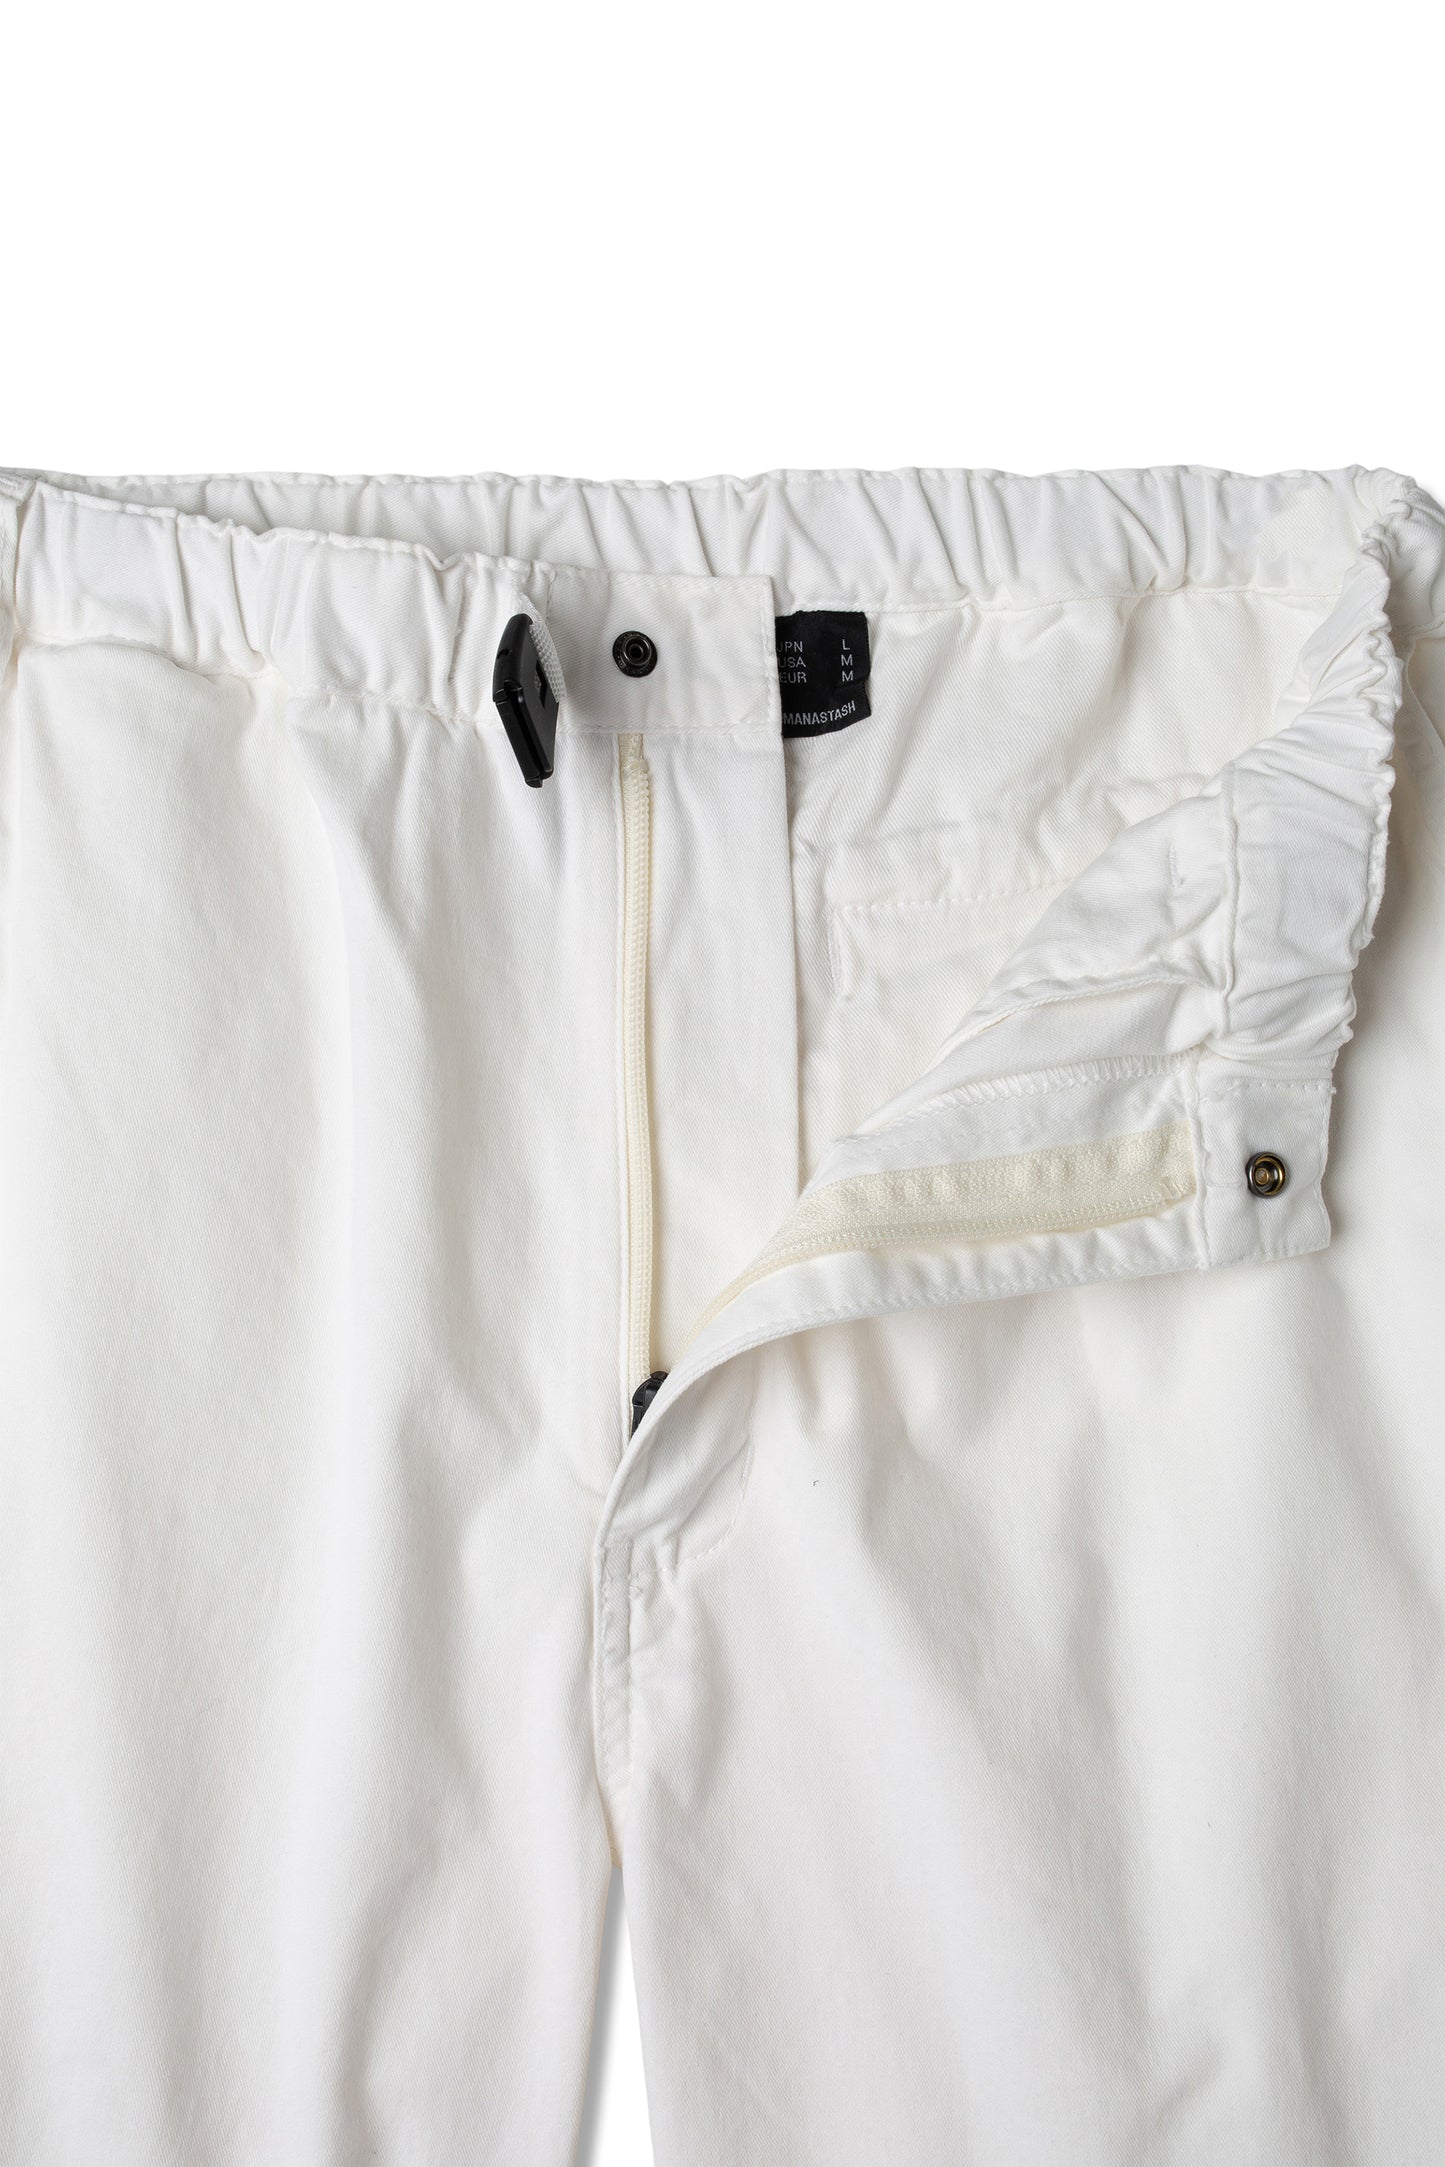 Flex Climber Wide Shorts (Off White)